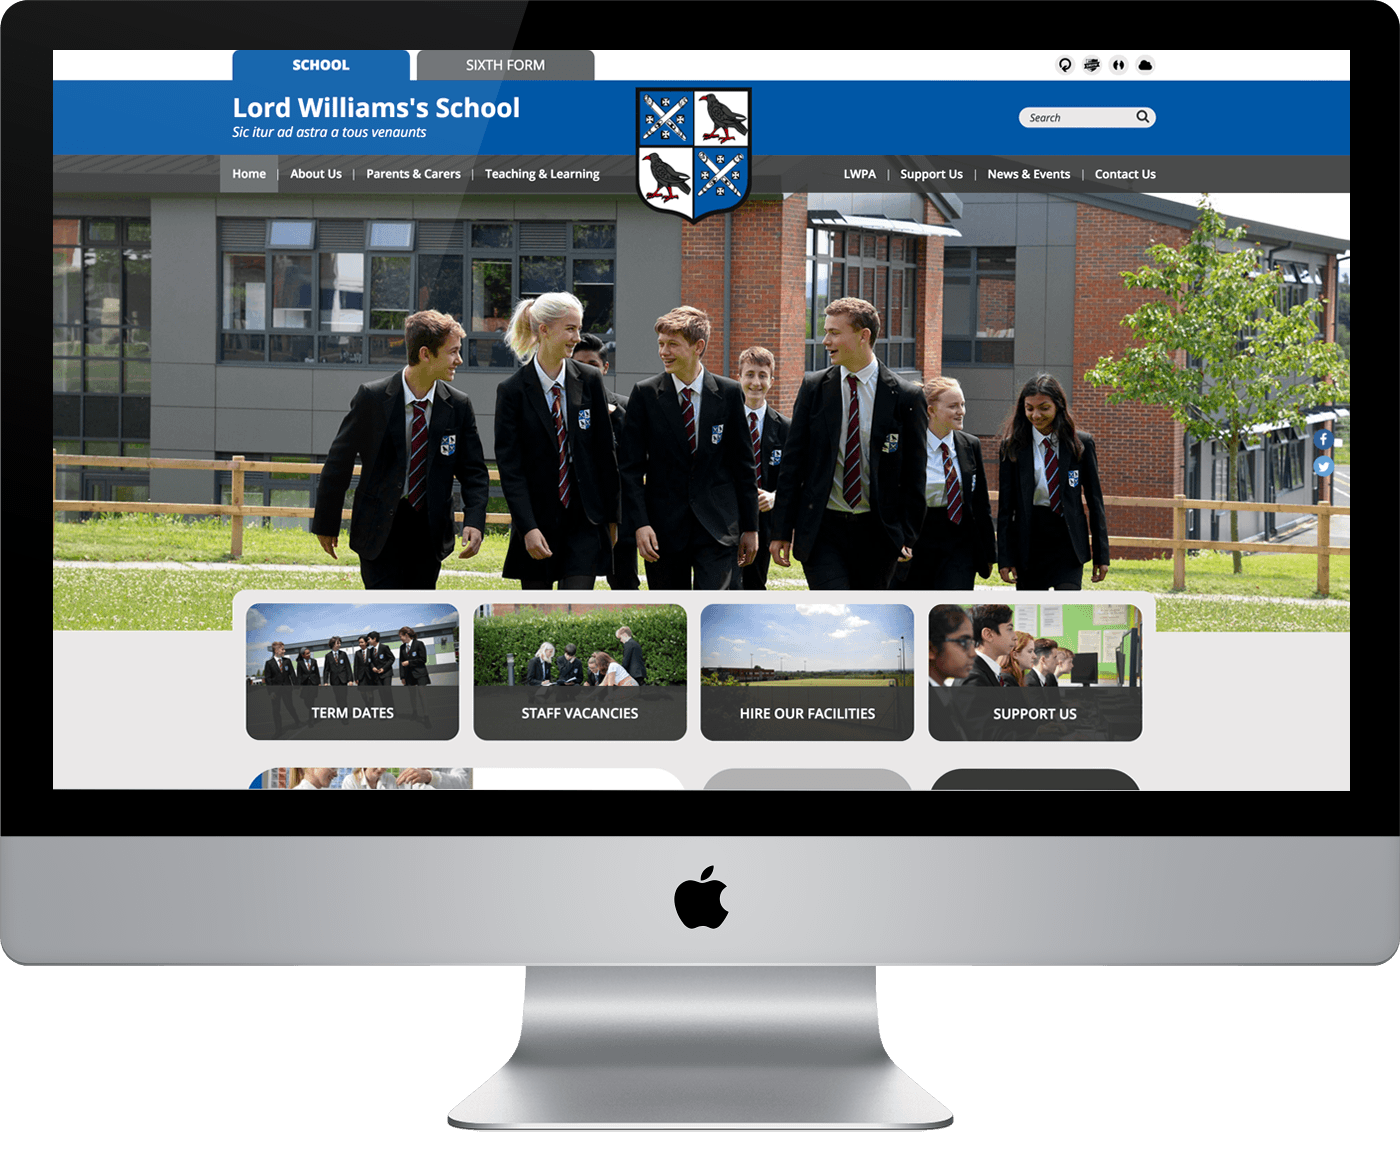  Lord Williams's School